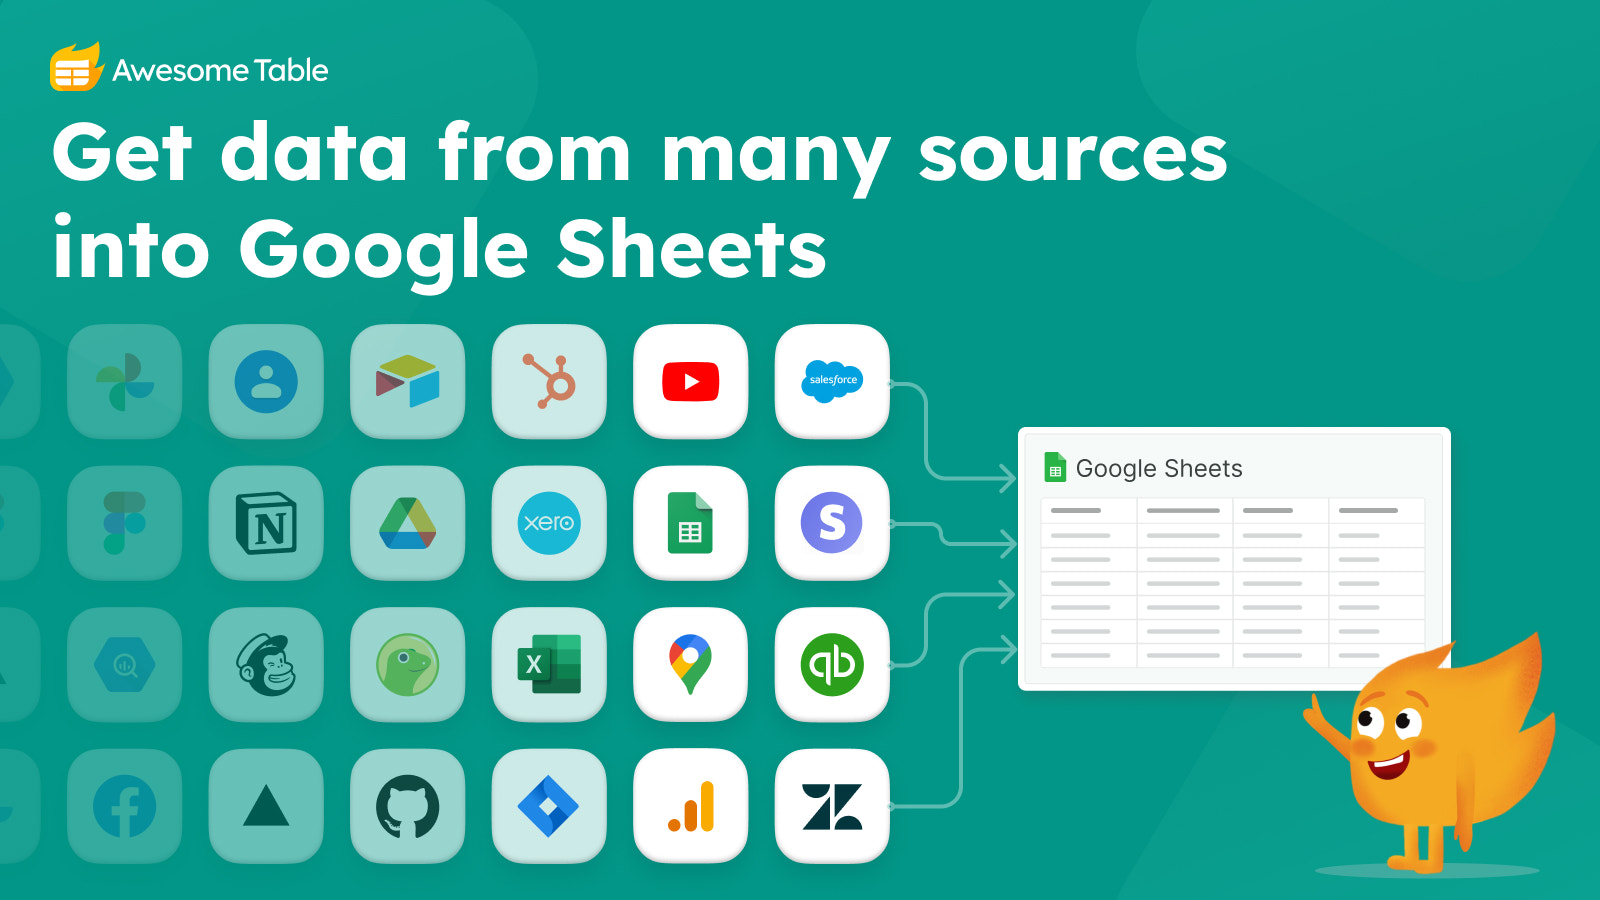 Importer data til Google Sheets